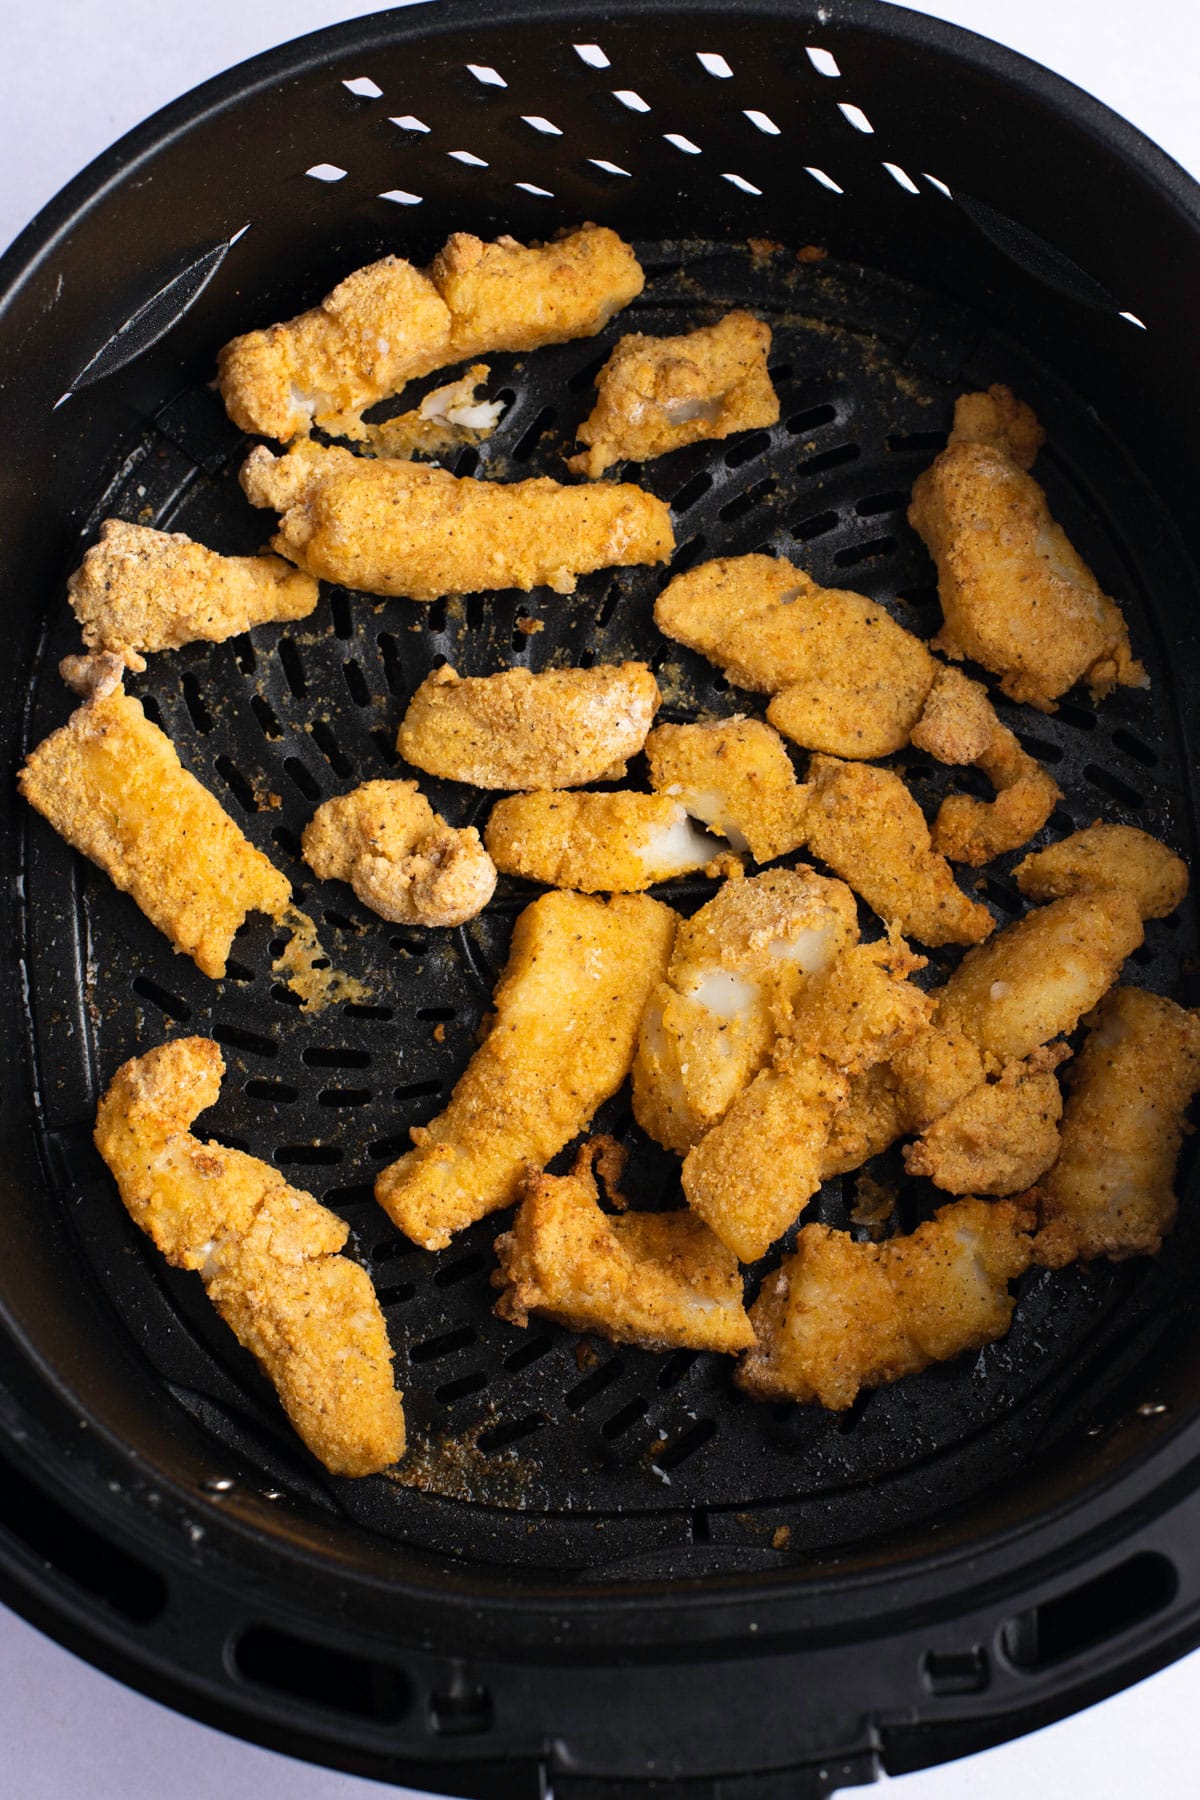 Fried fish strips in an air fryer basket.